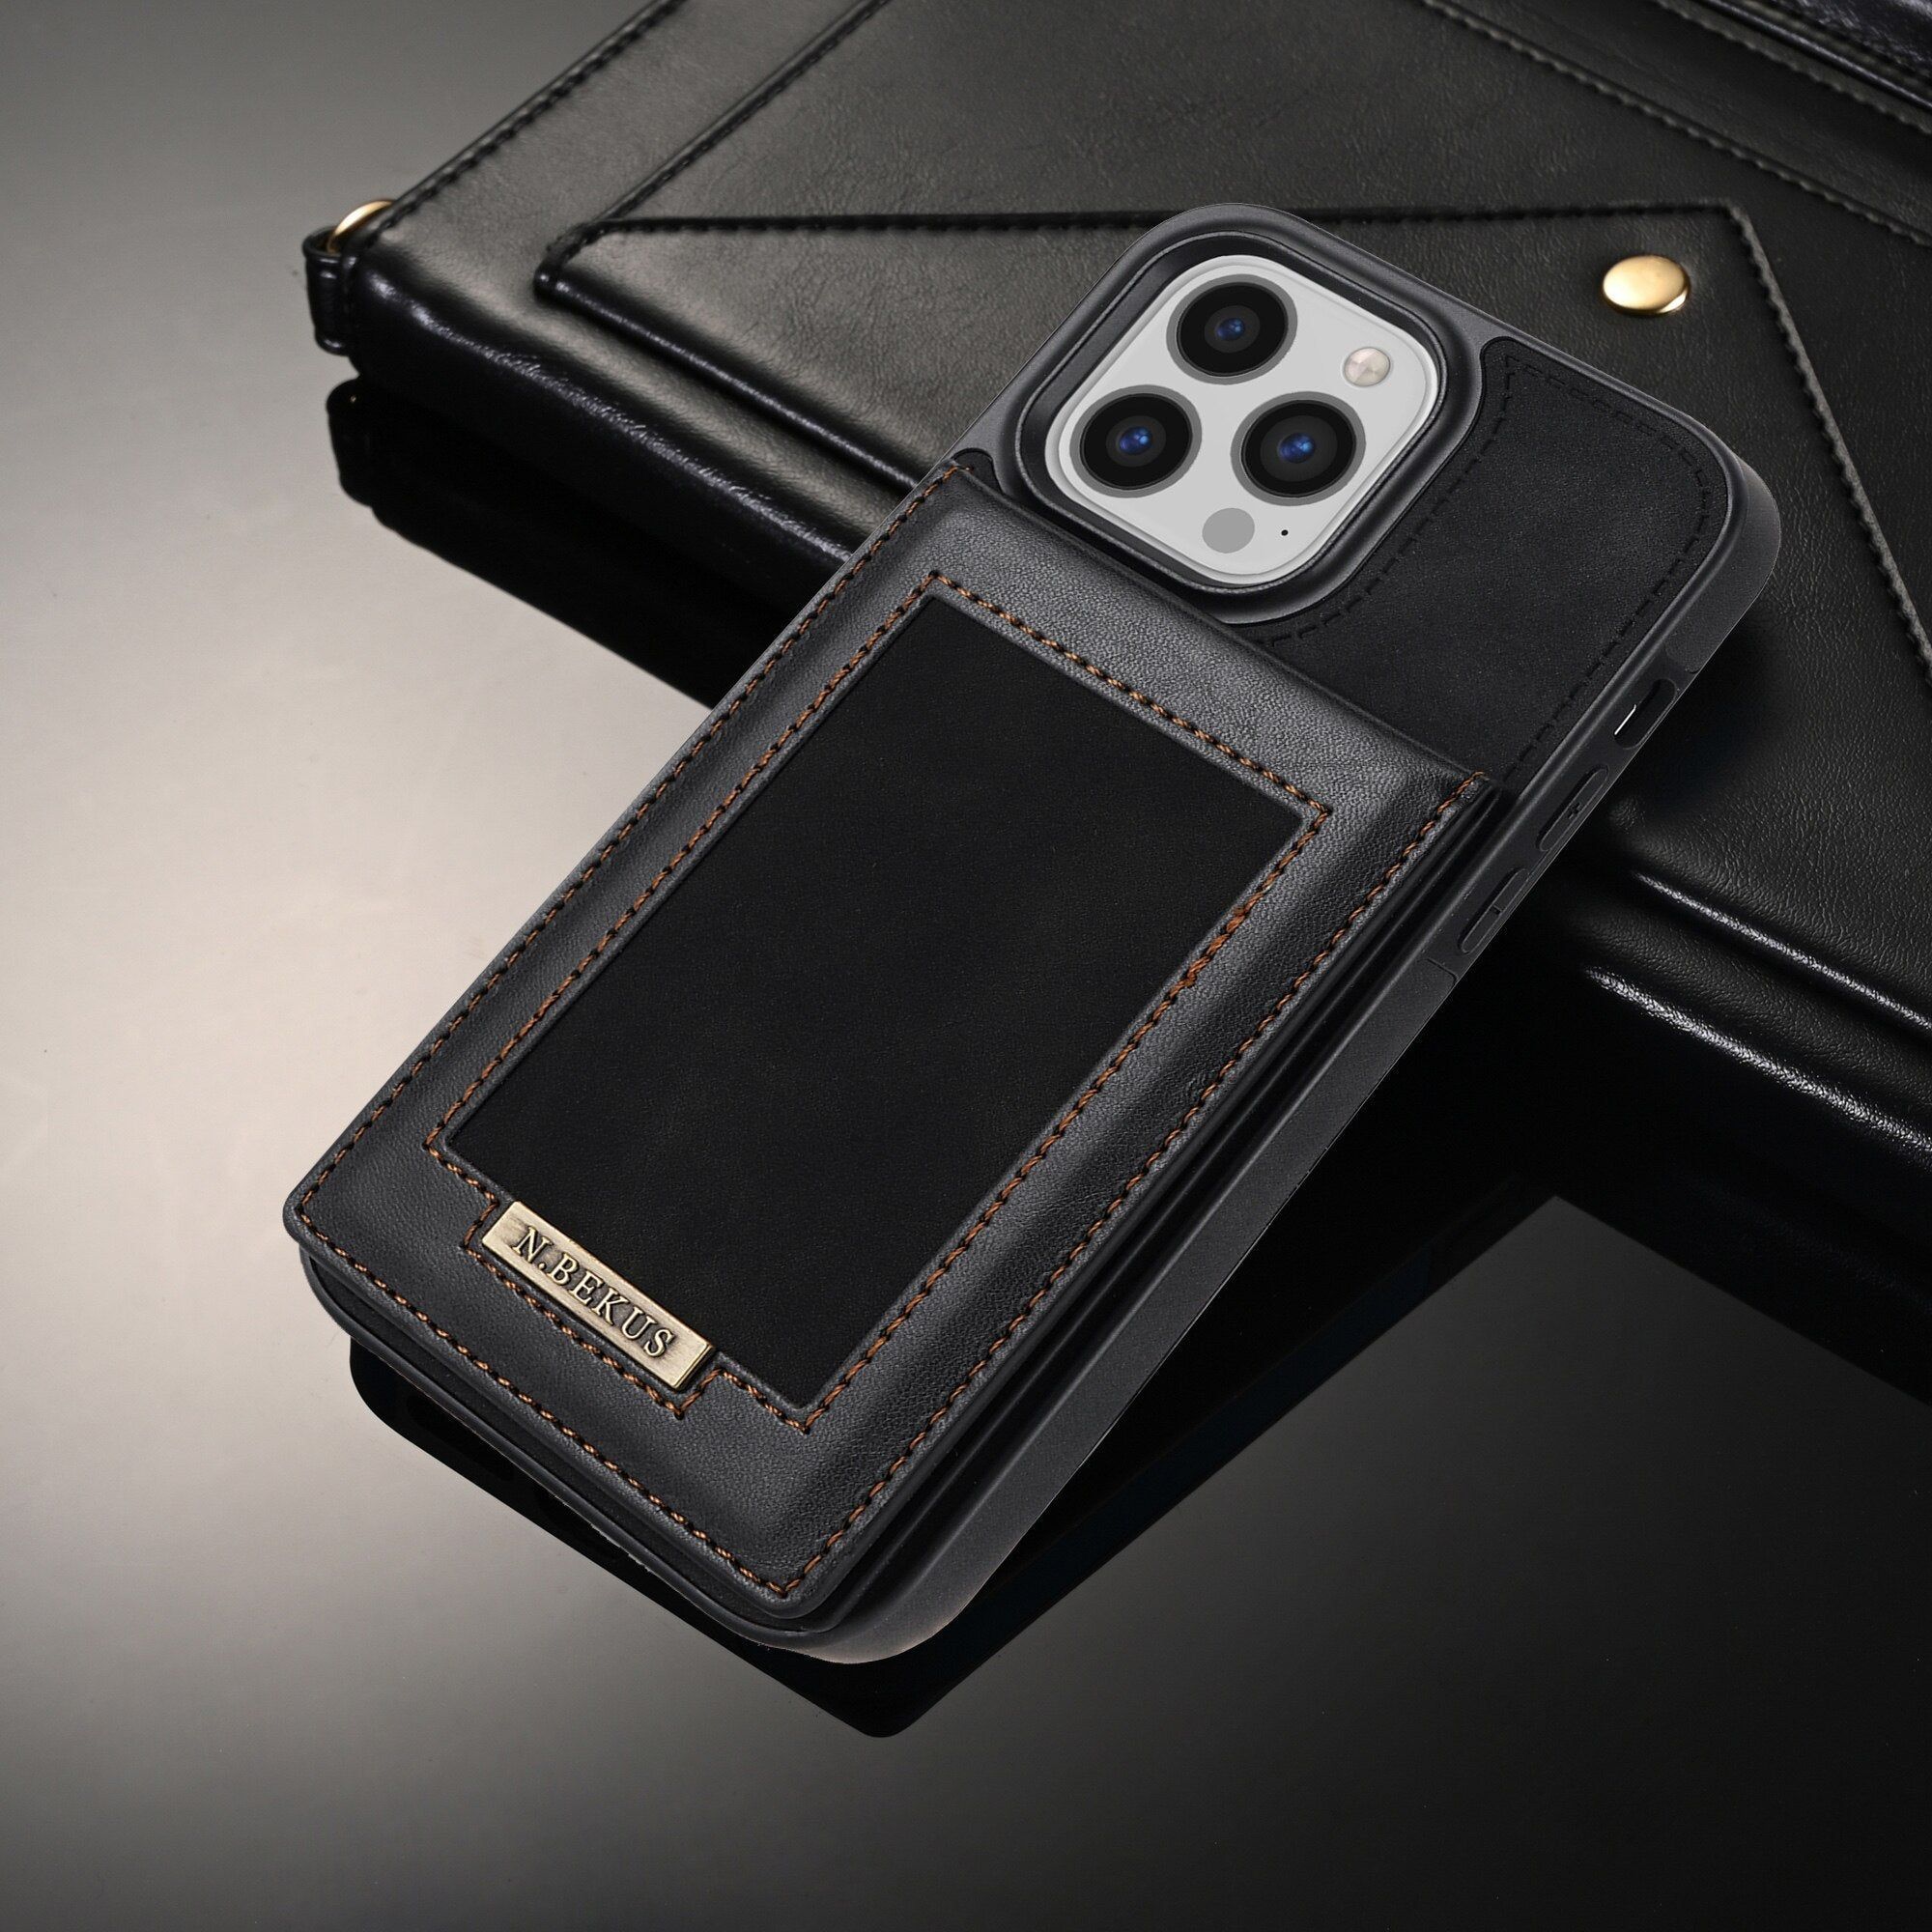 Luxury Designer iPhone 13 Wallet Cases